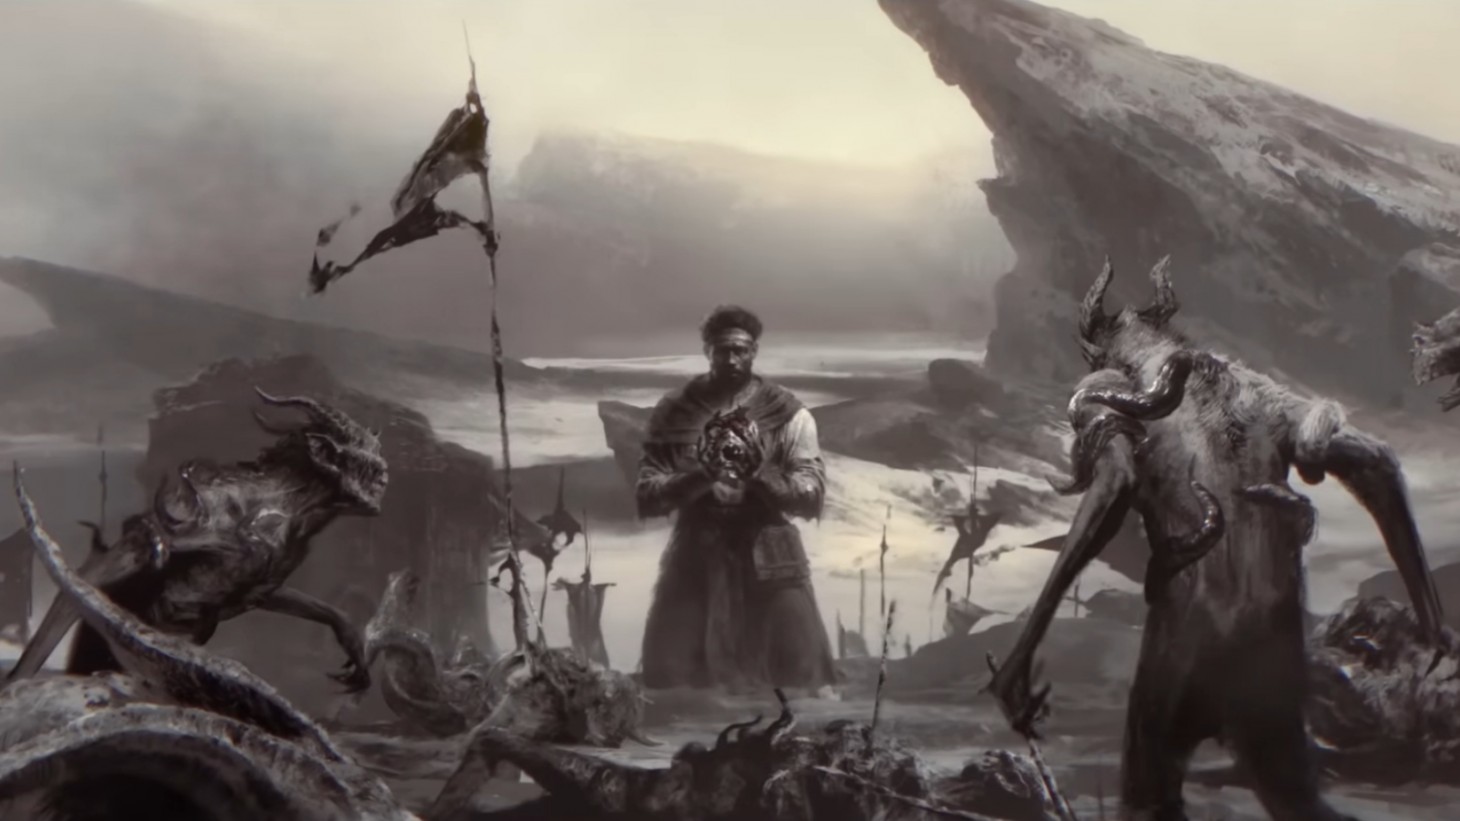 Diablo IV - New Season Gameplay Trailer